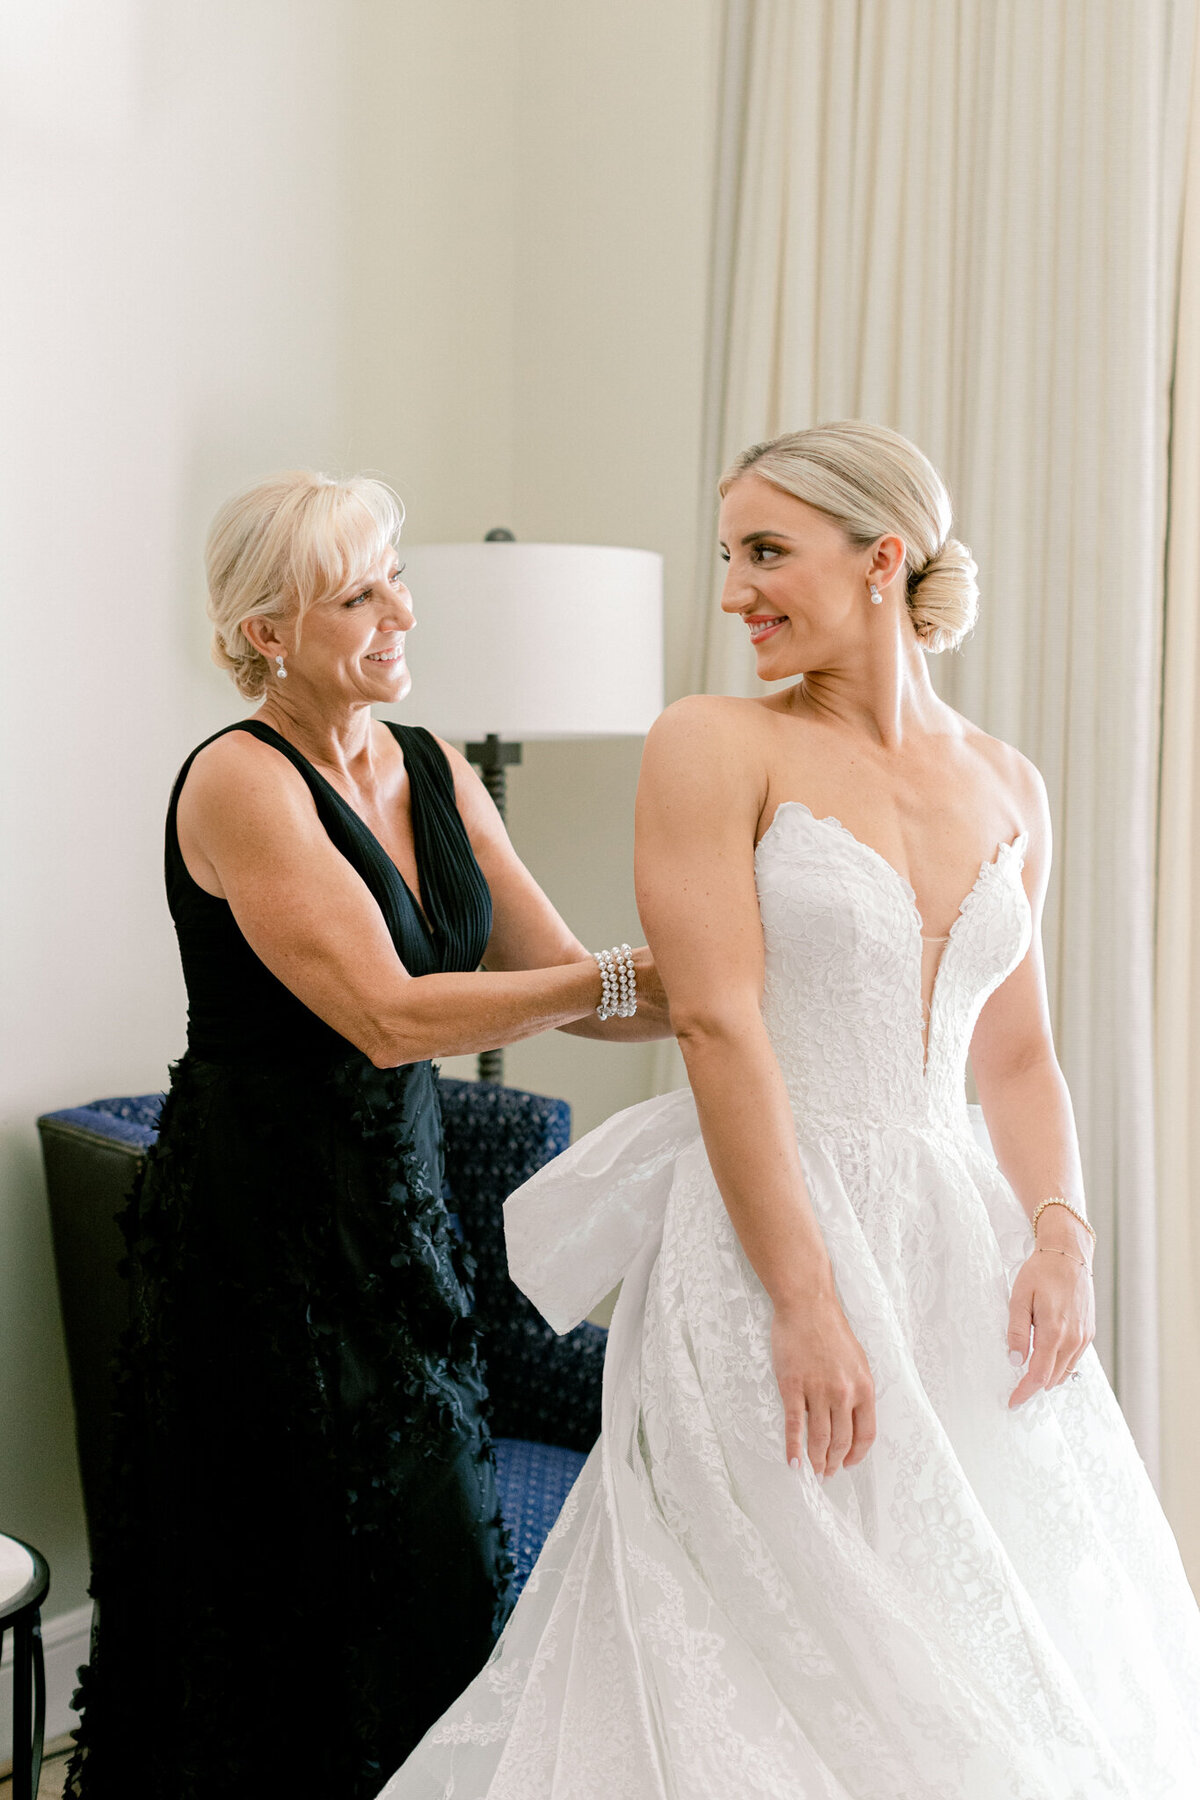 Katelyn & Kyle's Wedding at the Adolphus Hotel | Dallas Wedding Photographer | Sami Kathryn Photography-57